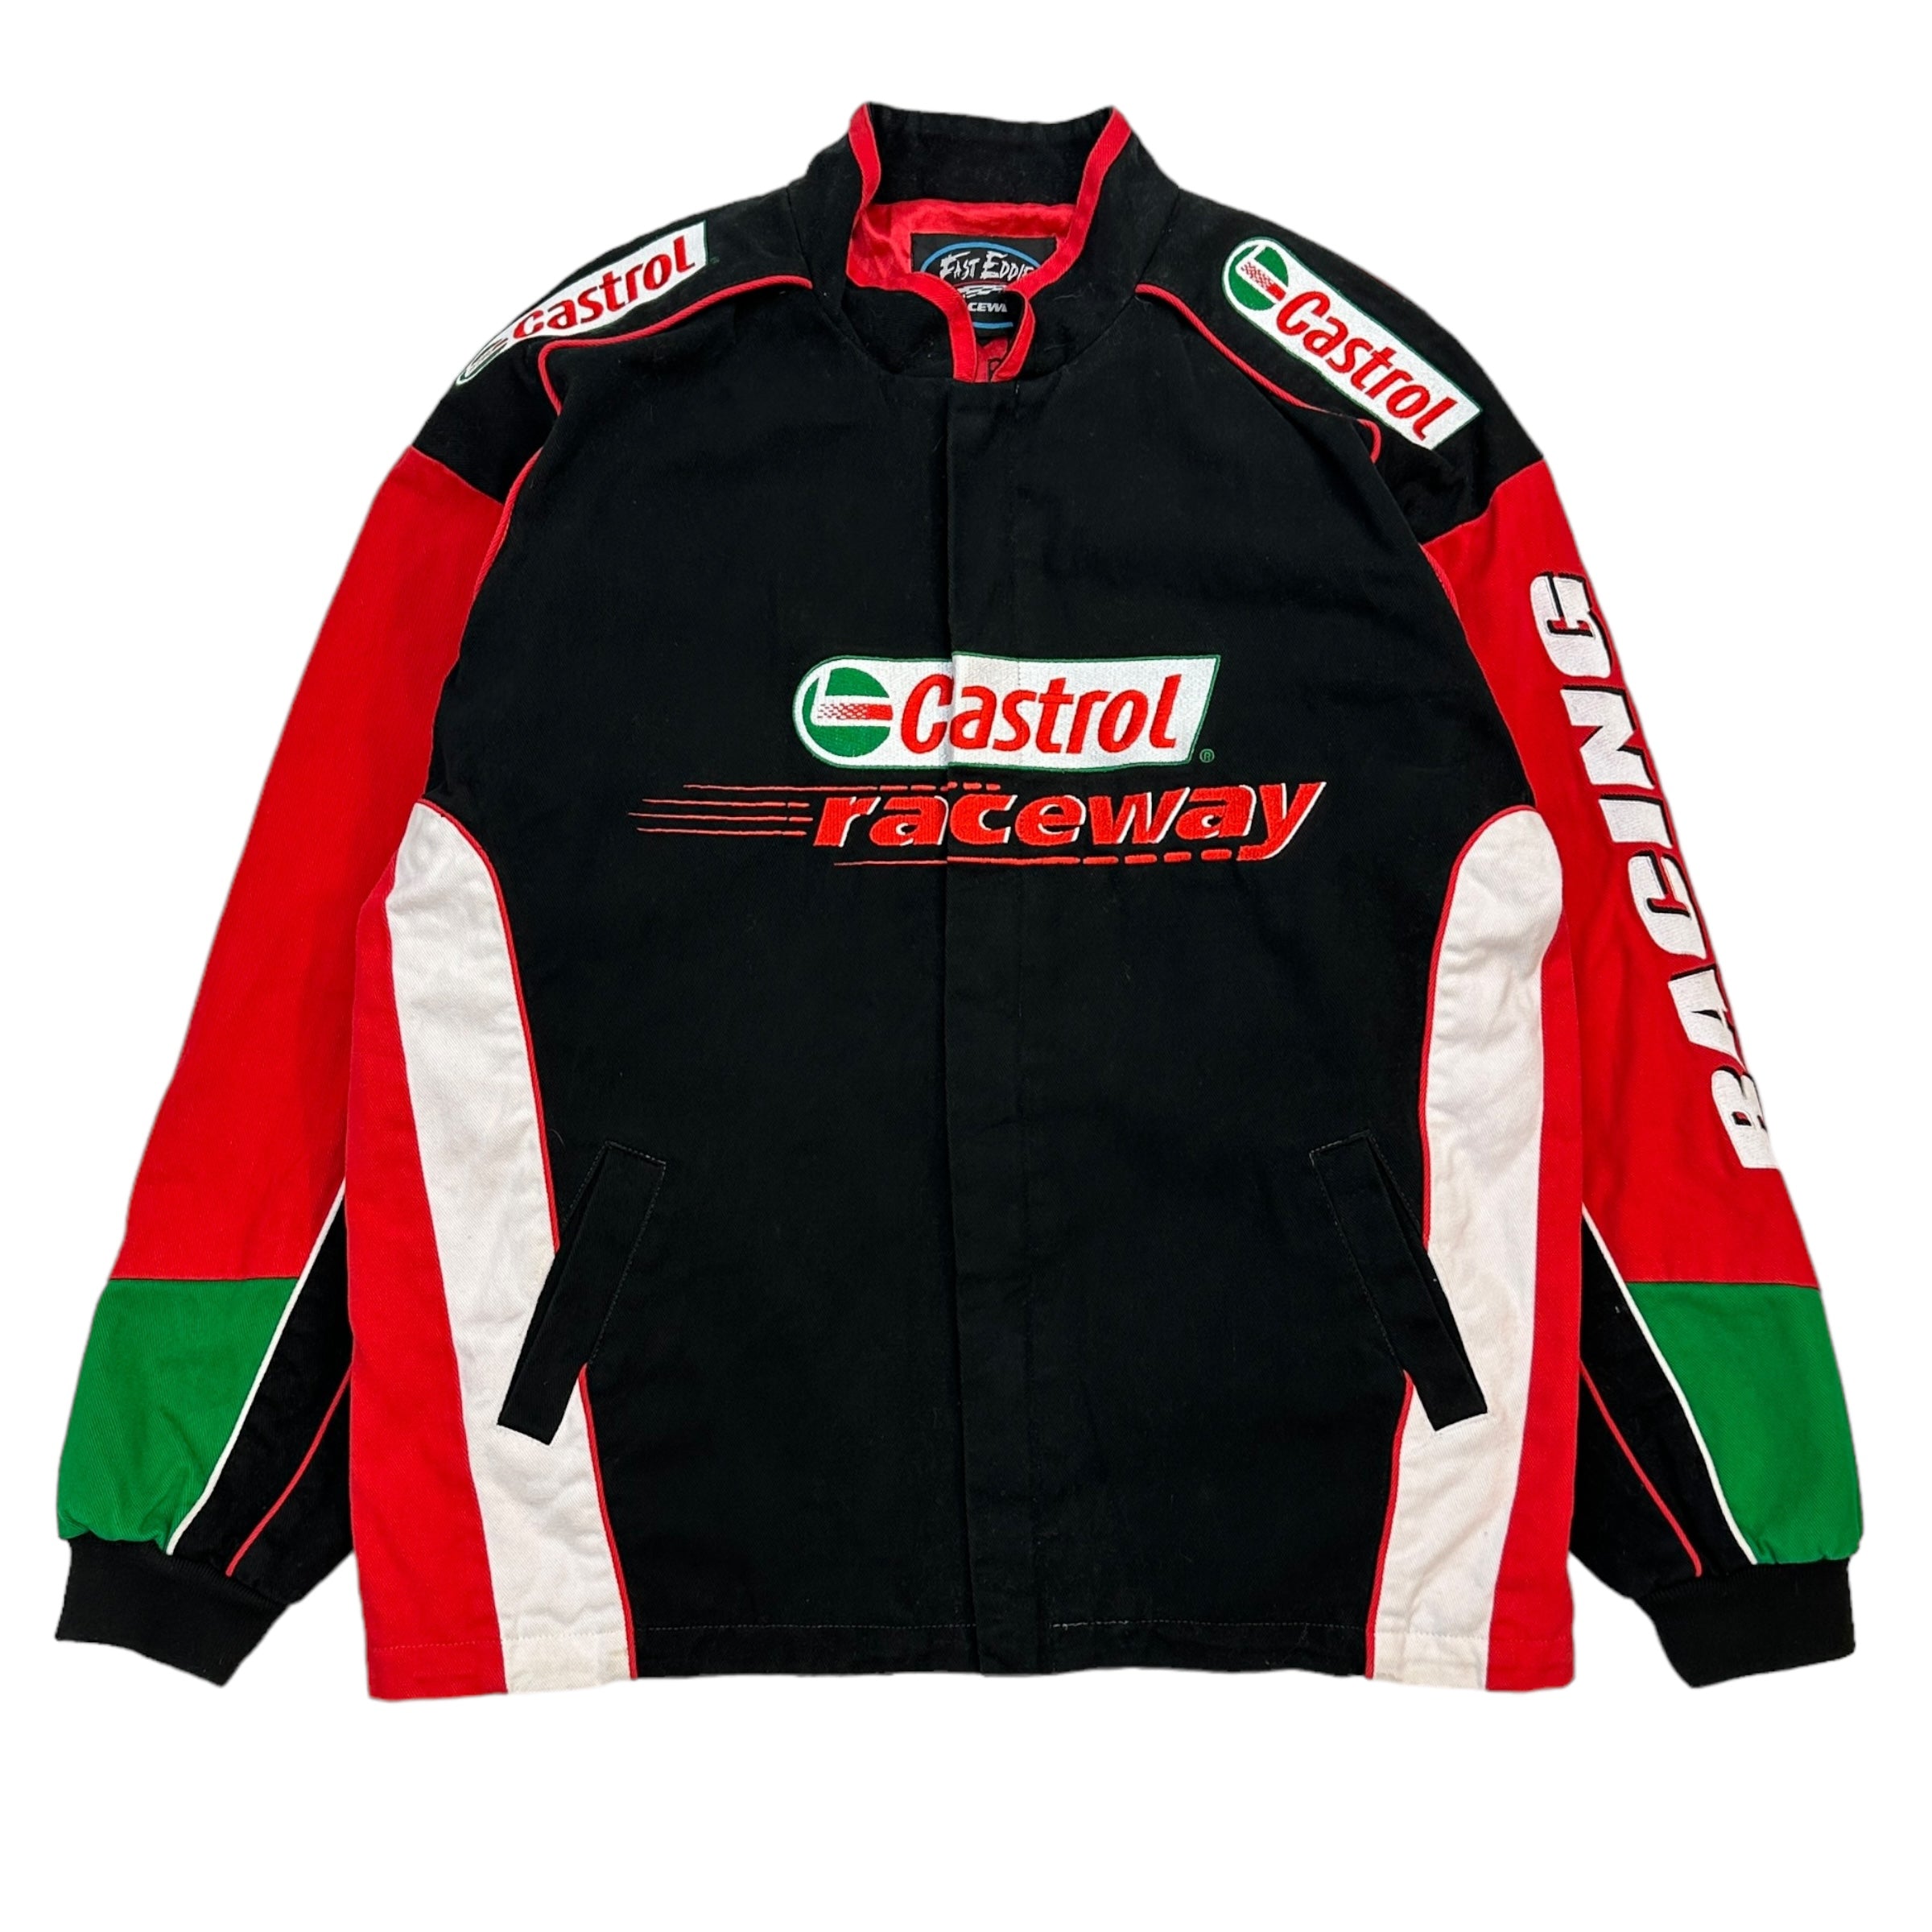 Vintage Castrol Raceway Racing Jacket